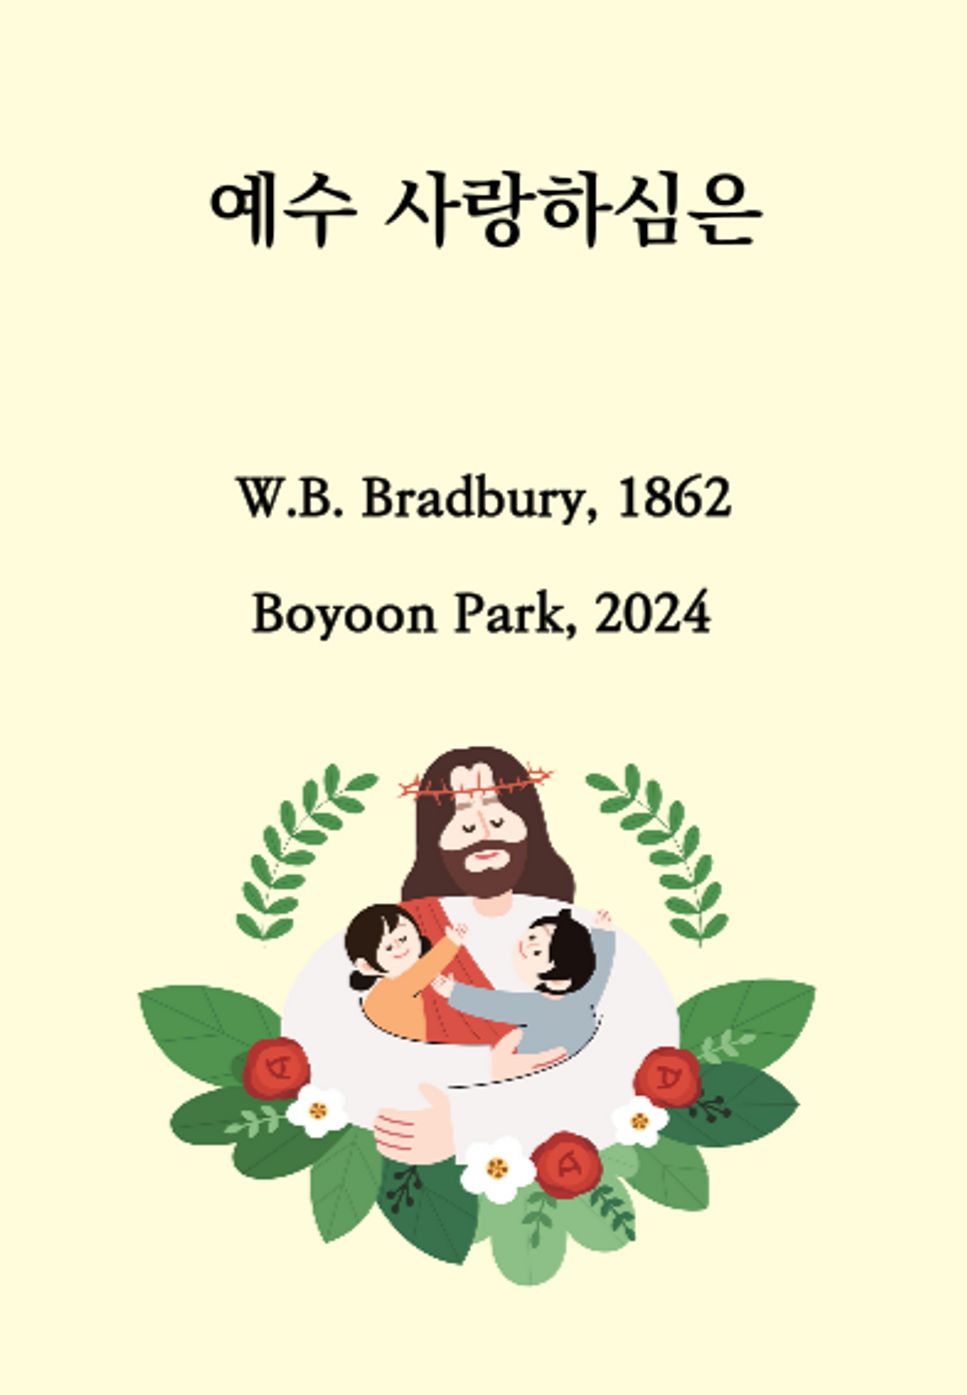 W.B. Bradbury - Jesus Loves Me, This I know (For Children Pianist) by Boyoon Park